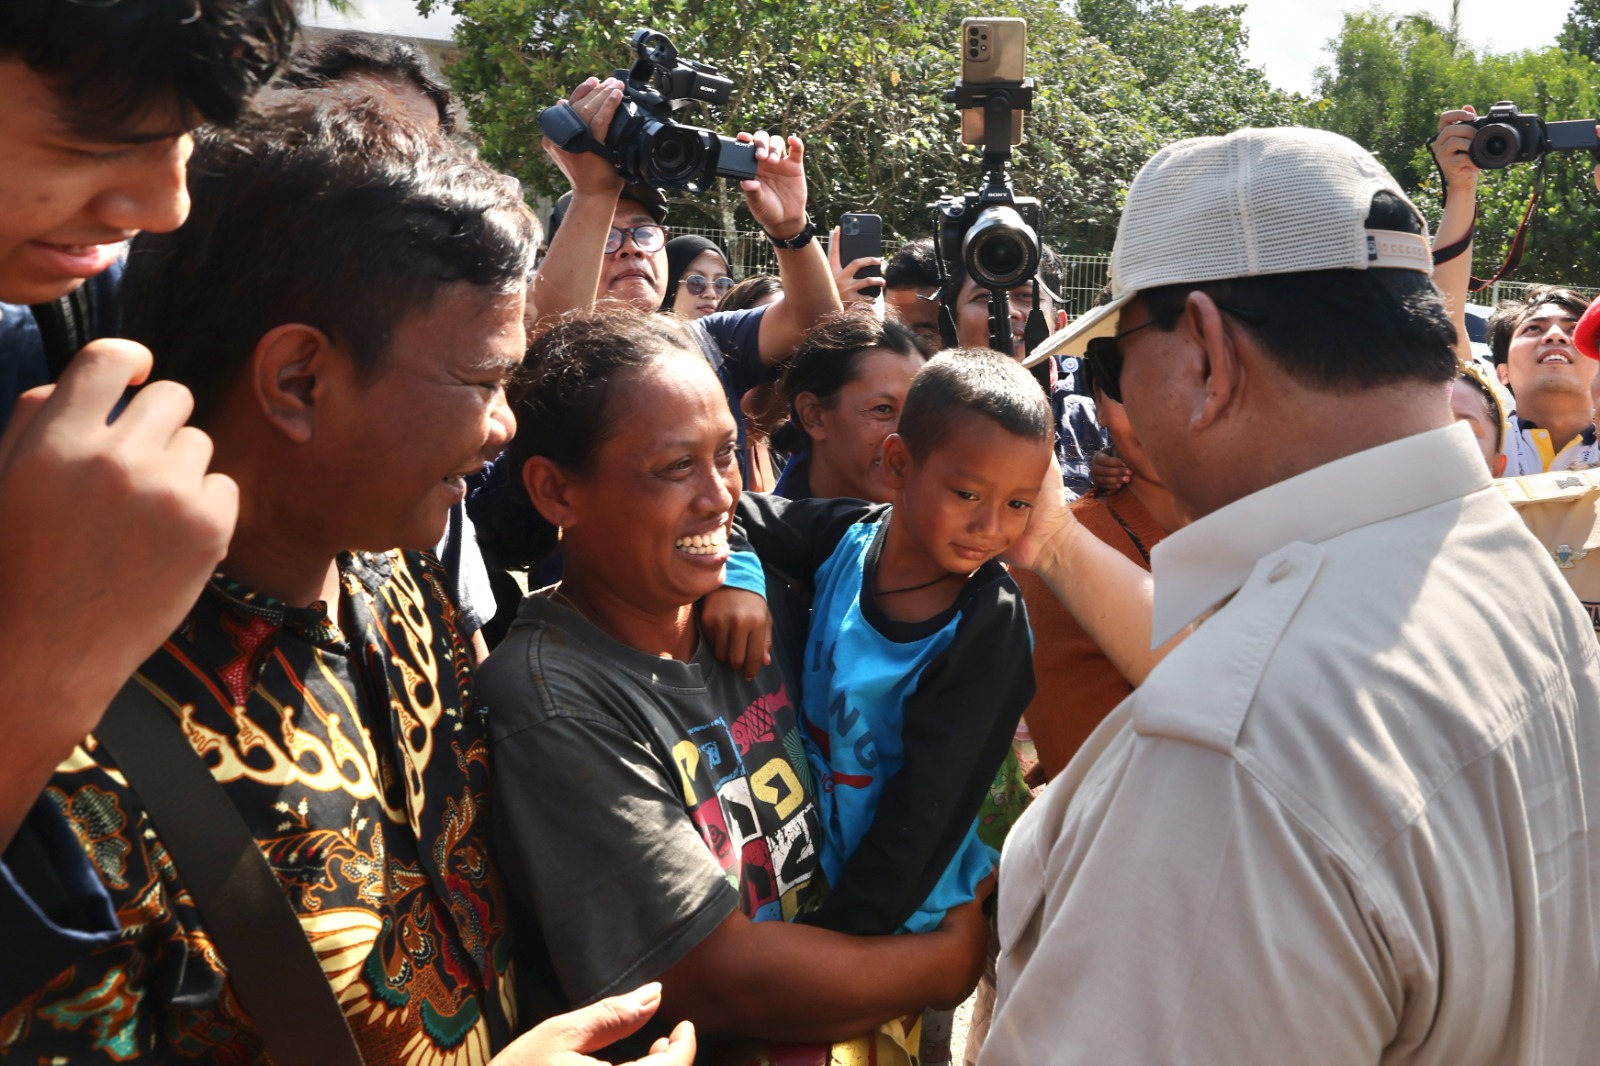 Prabowo Diteriaki Presiden Saat Kunjungi Pangandaran Bareng Susi Pudjiastuti